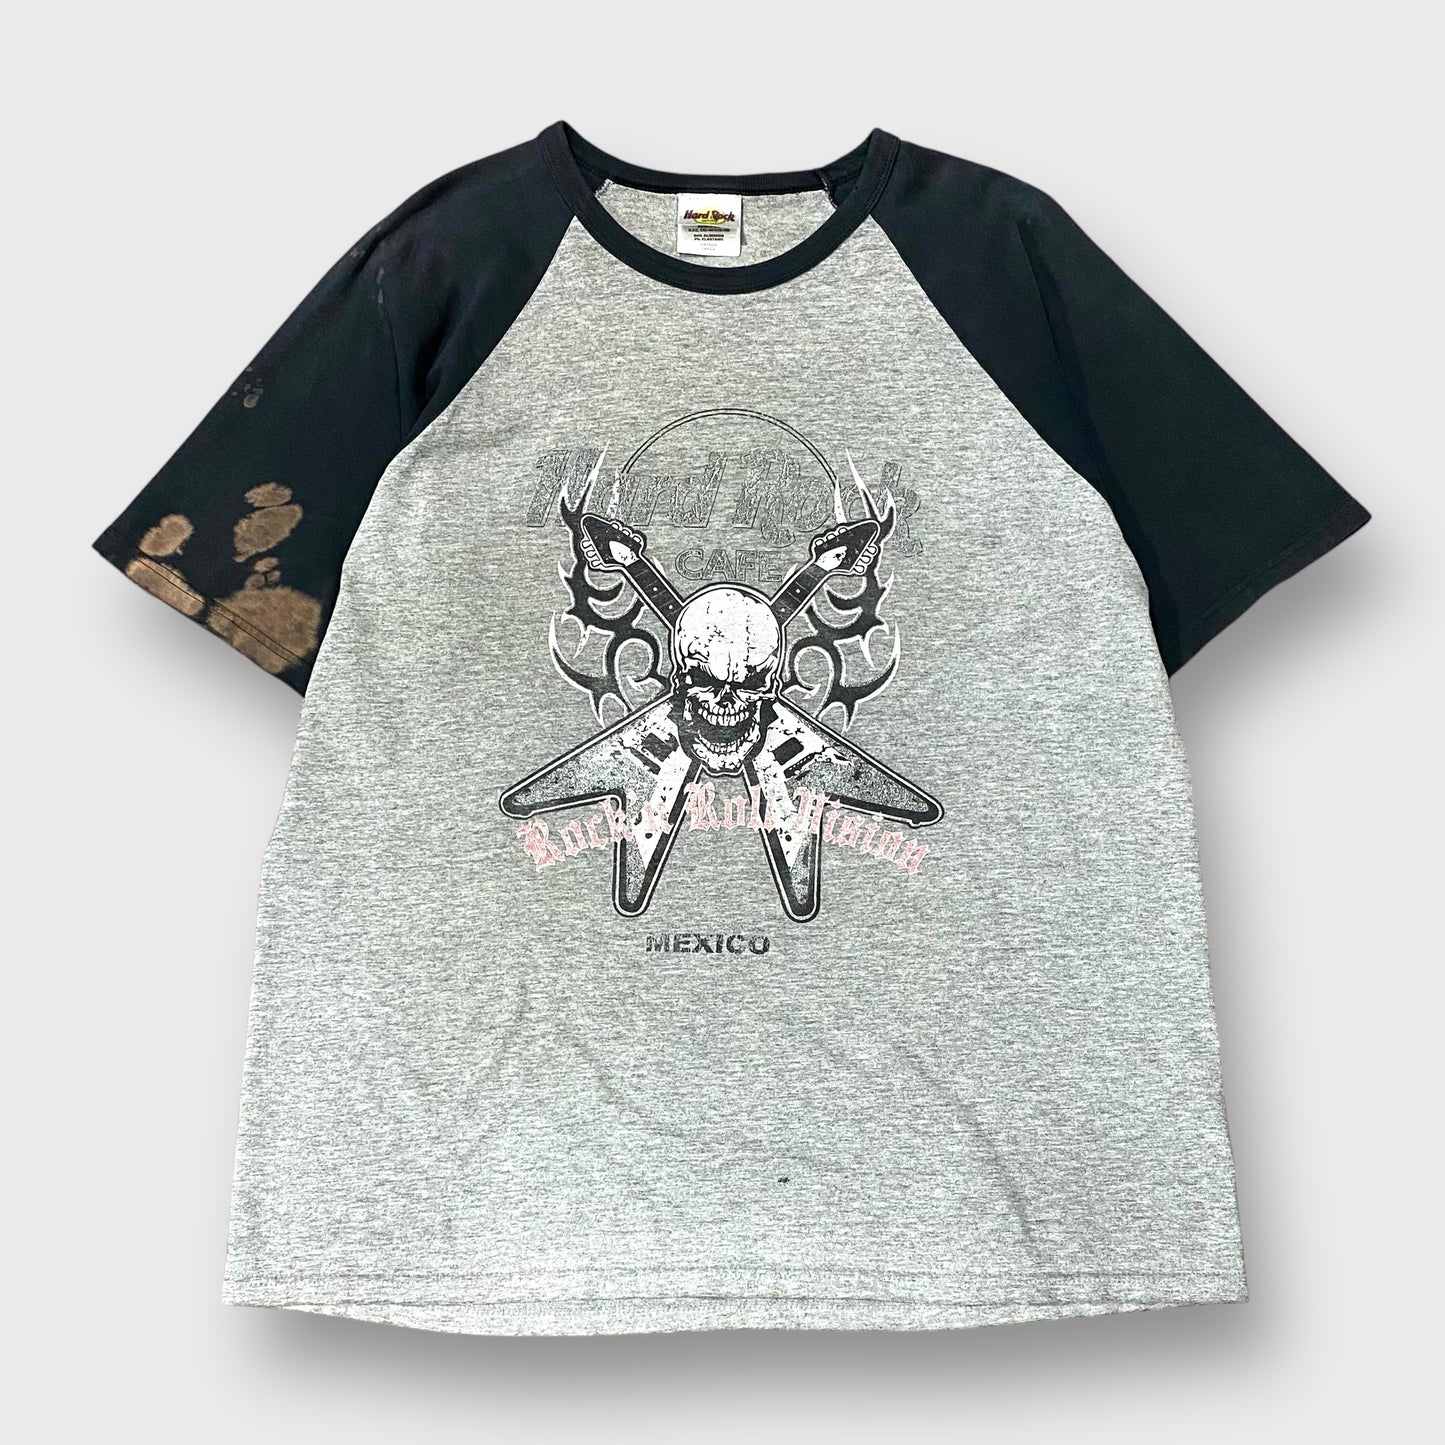 "Hard Rock Cafe" Skull design Raglan sleeve t-shirt